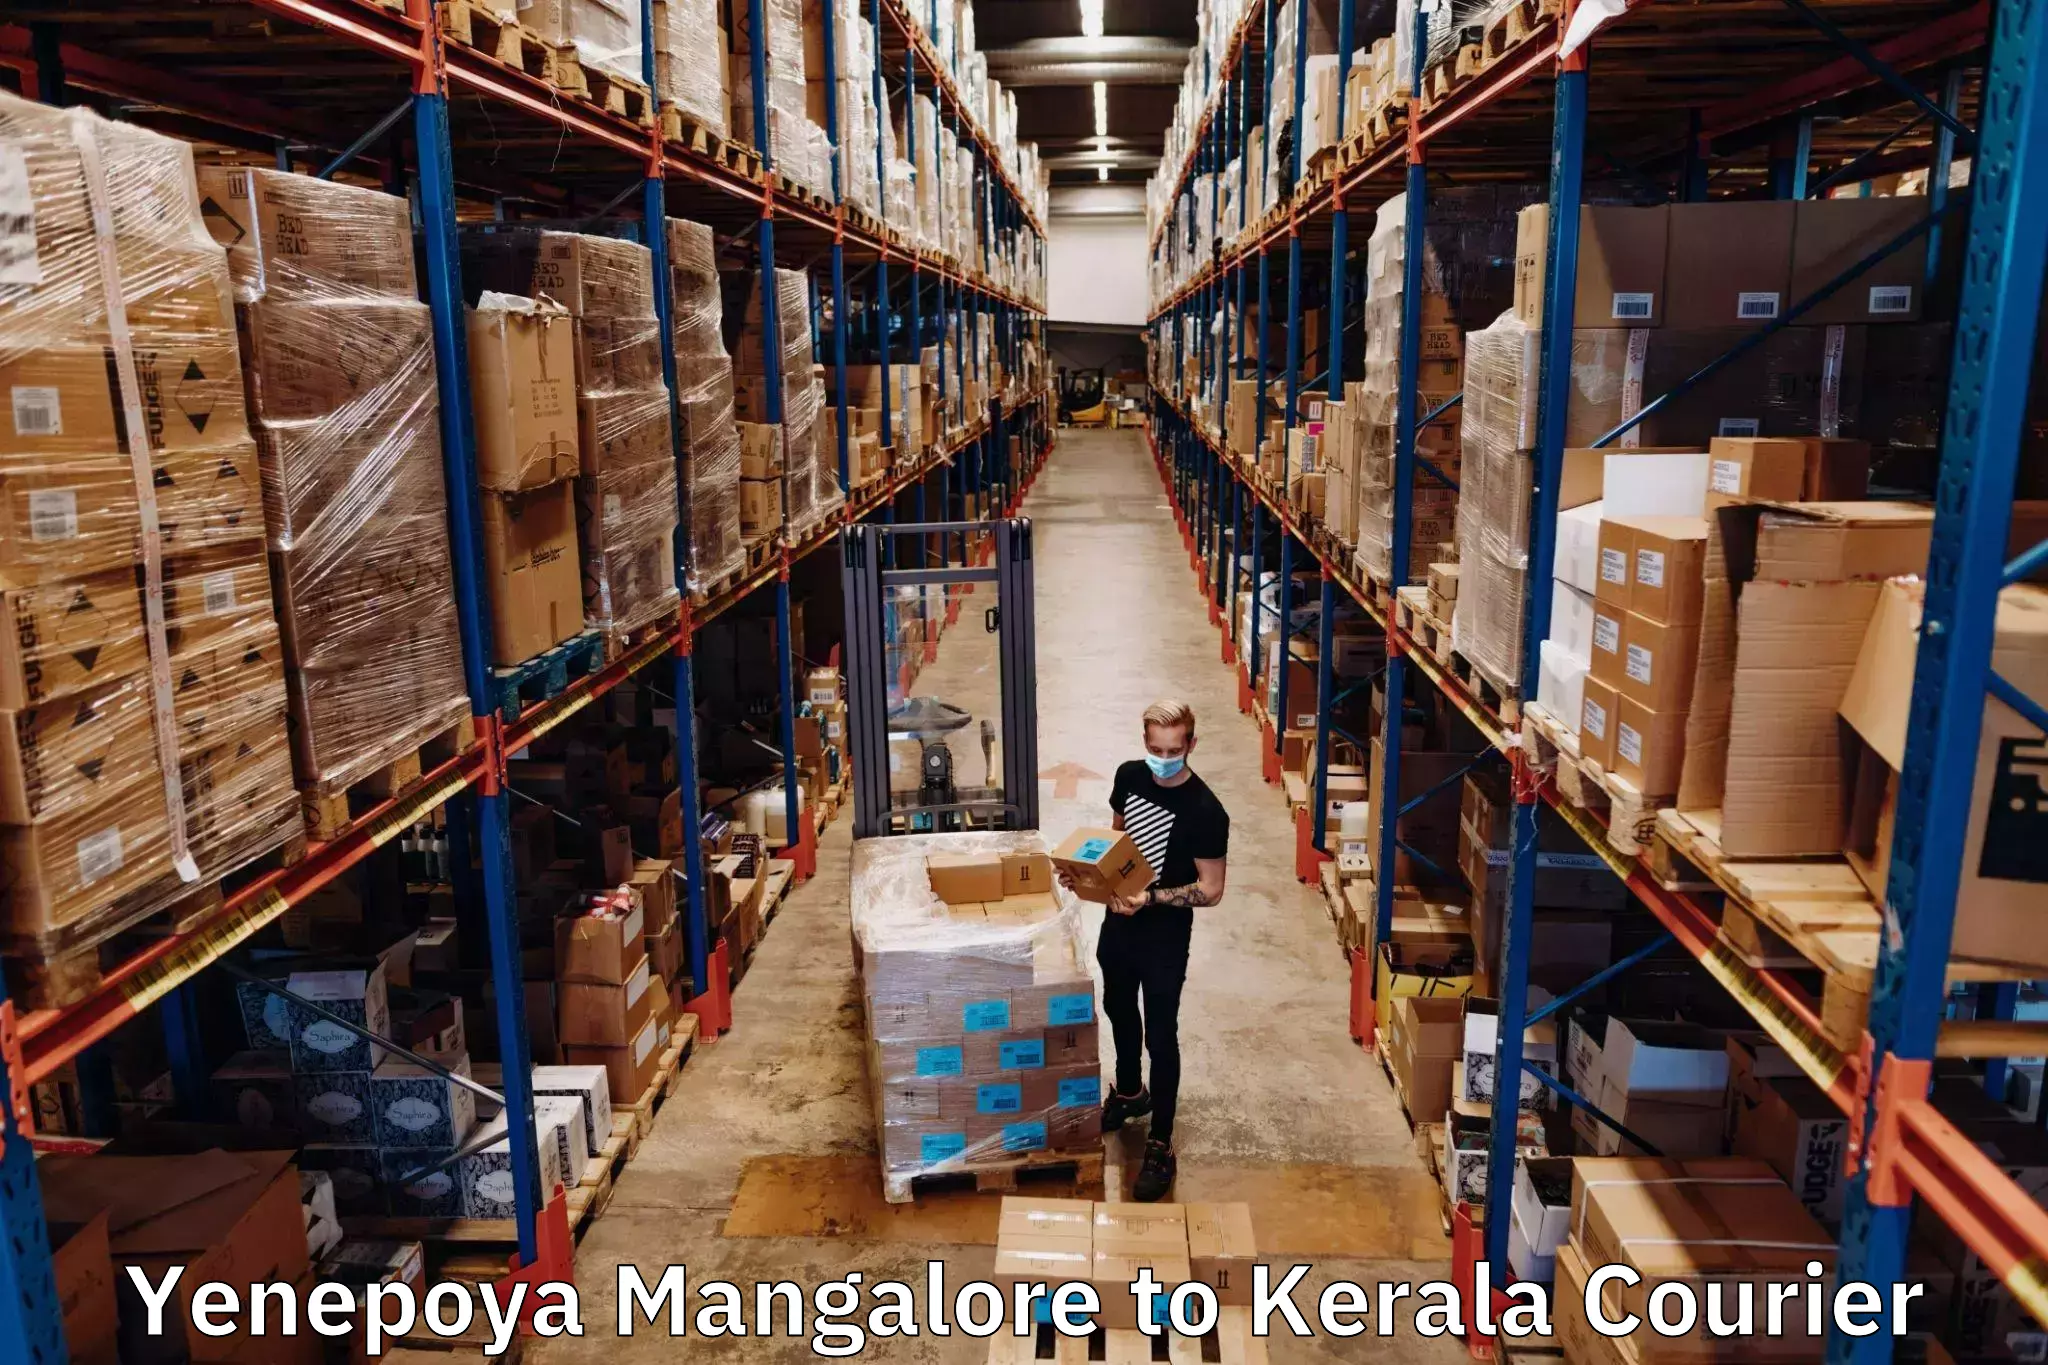 Professional courier handling Yenepoya Mangalore to Haripad